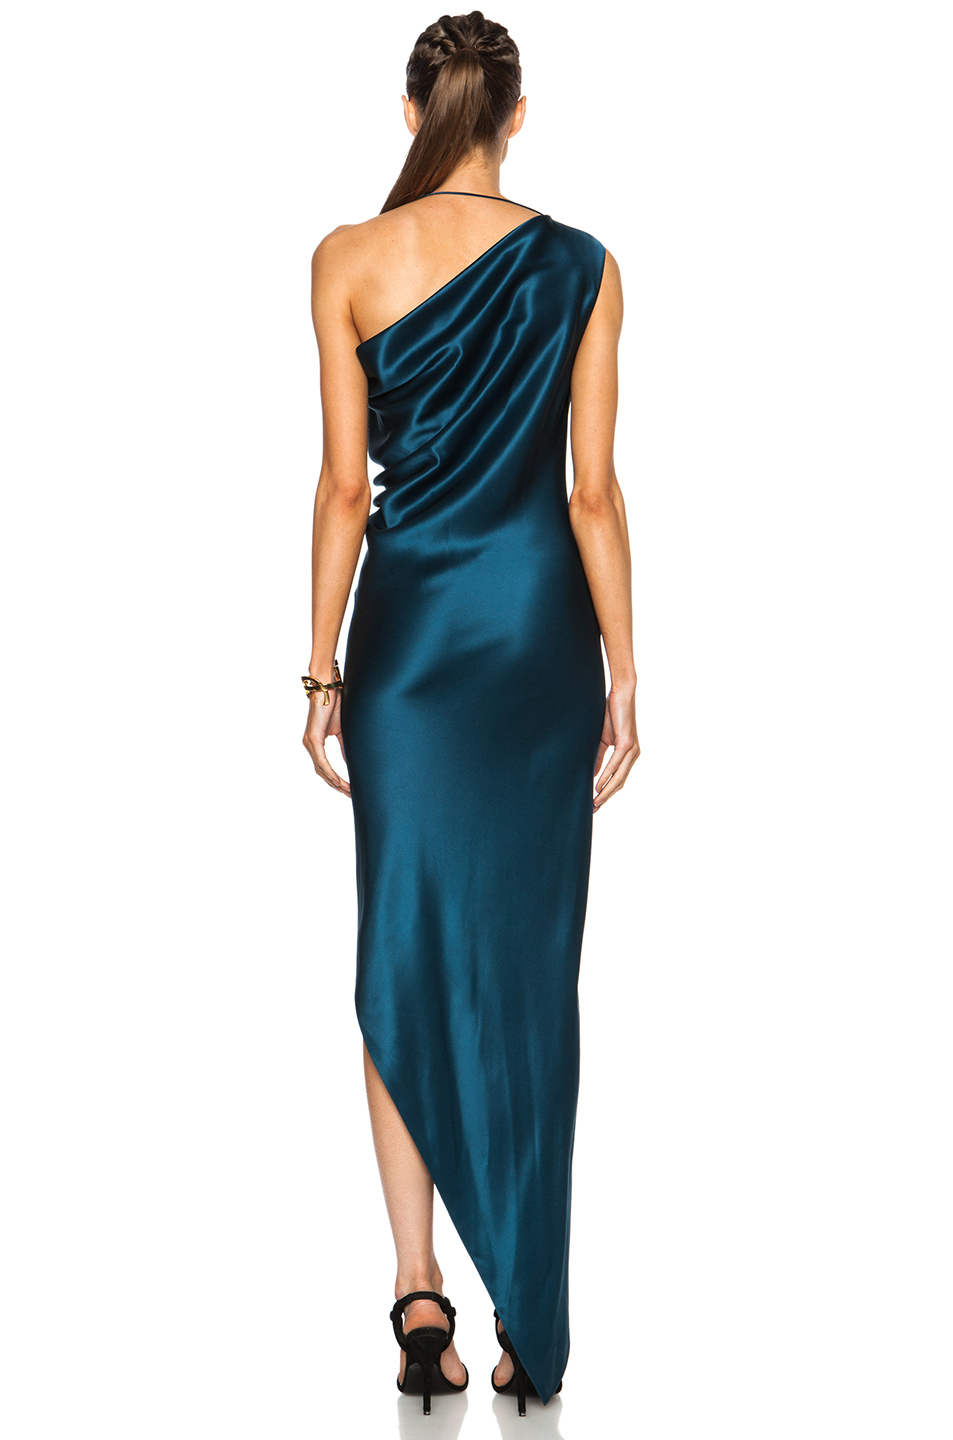 Lyst - Cushnie Et Ochs Double Silk Charmeuse One Shoulder Dress in Blue